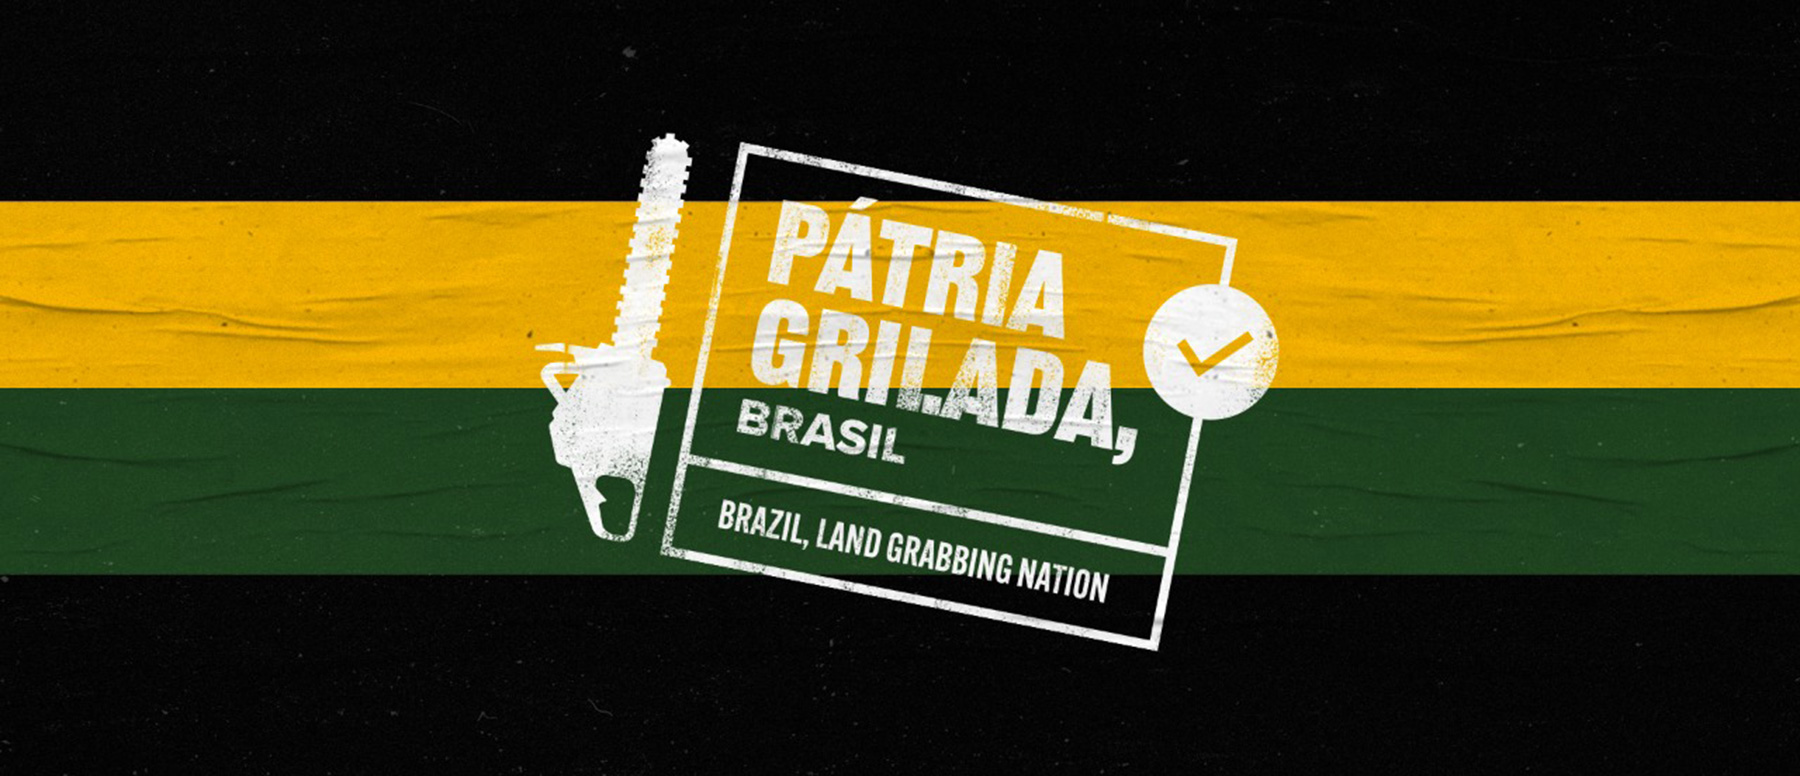 FEATURE: BRAZIL LAND GRABBING NATION